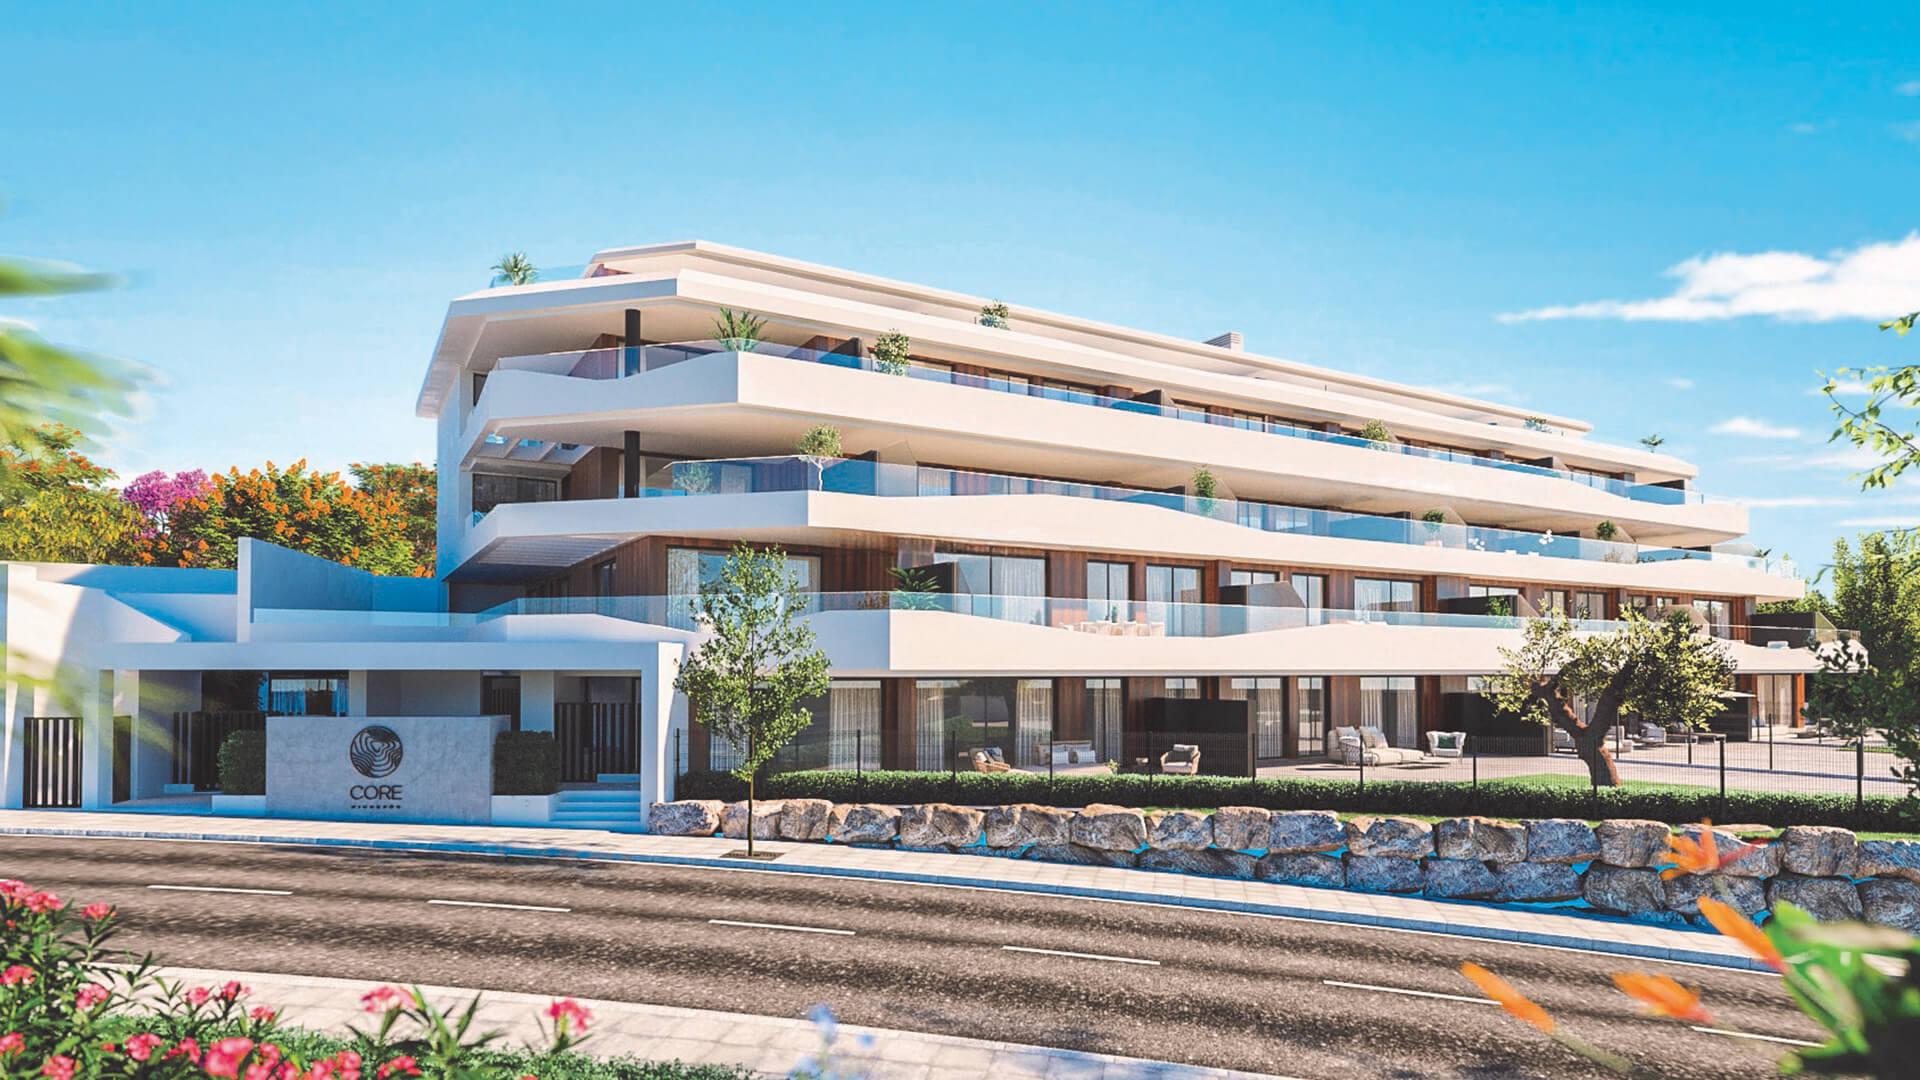 Core Higueron - Stunning New Apartments in Fuengirola